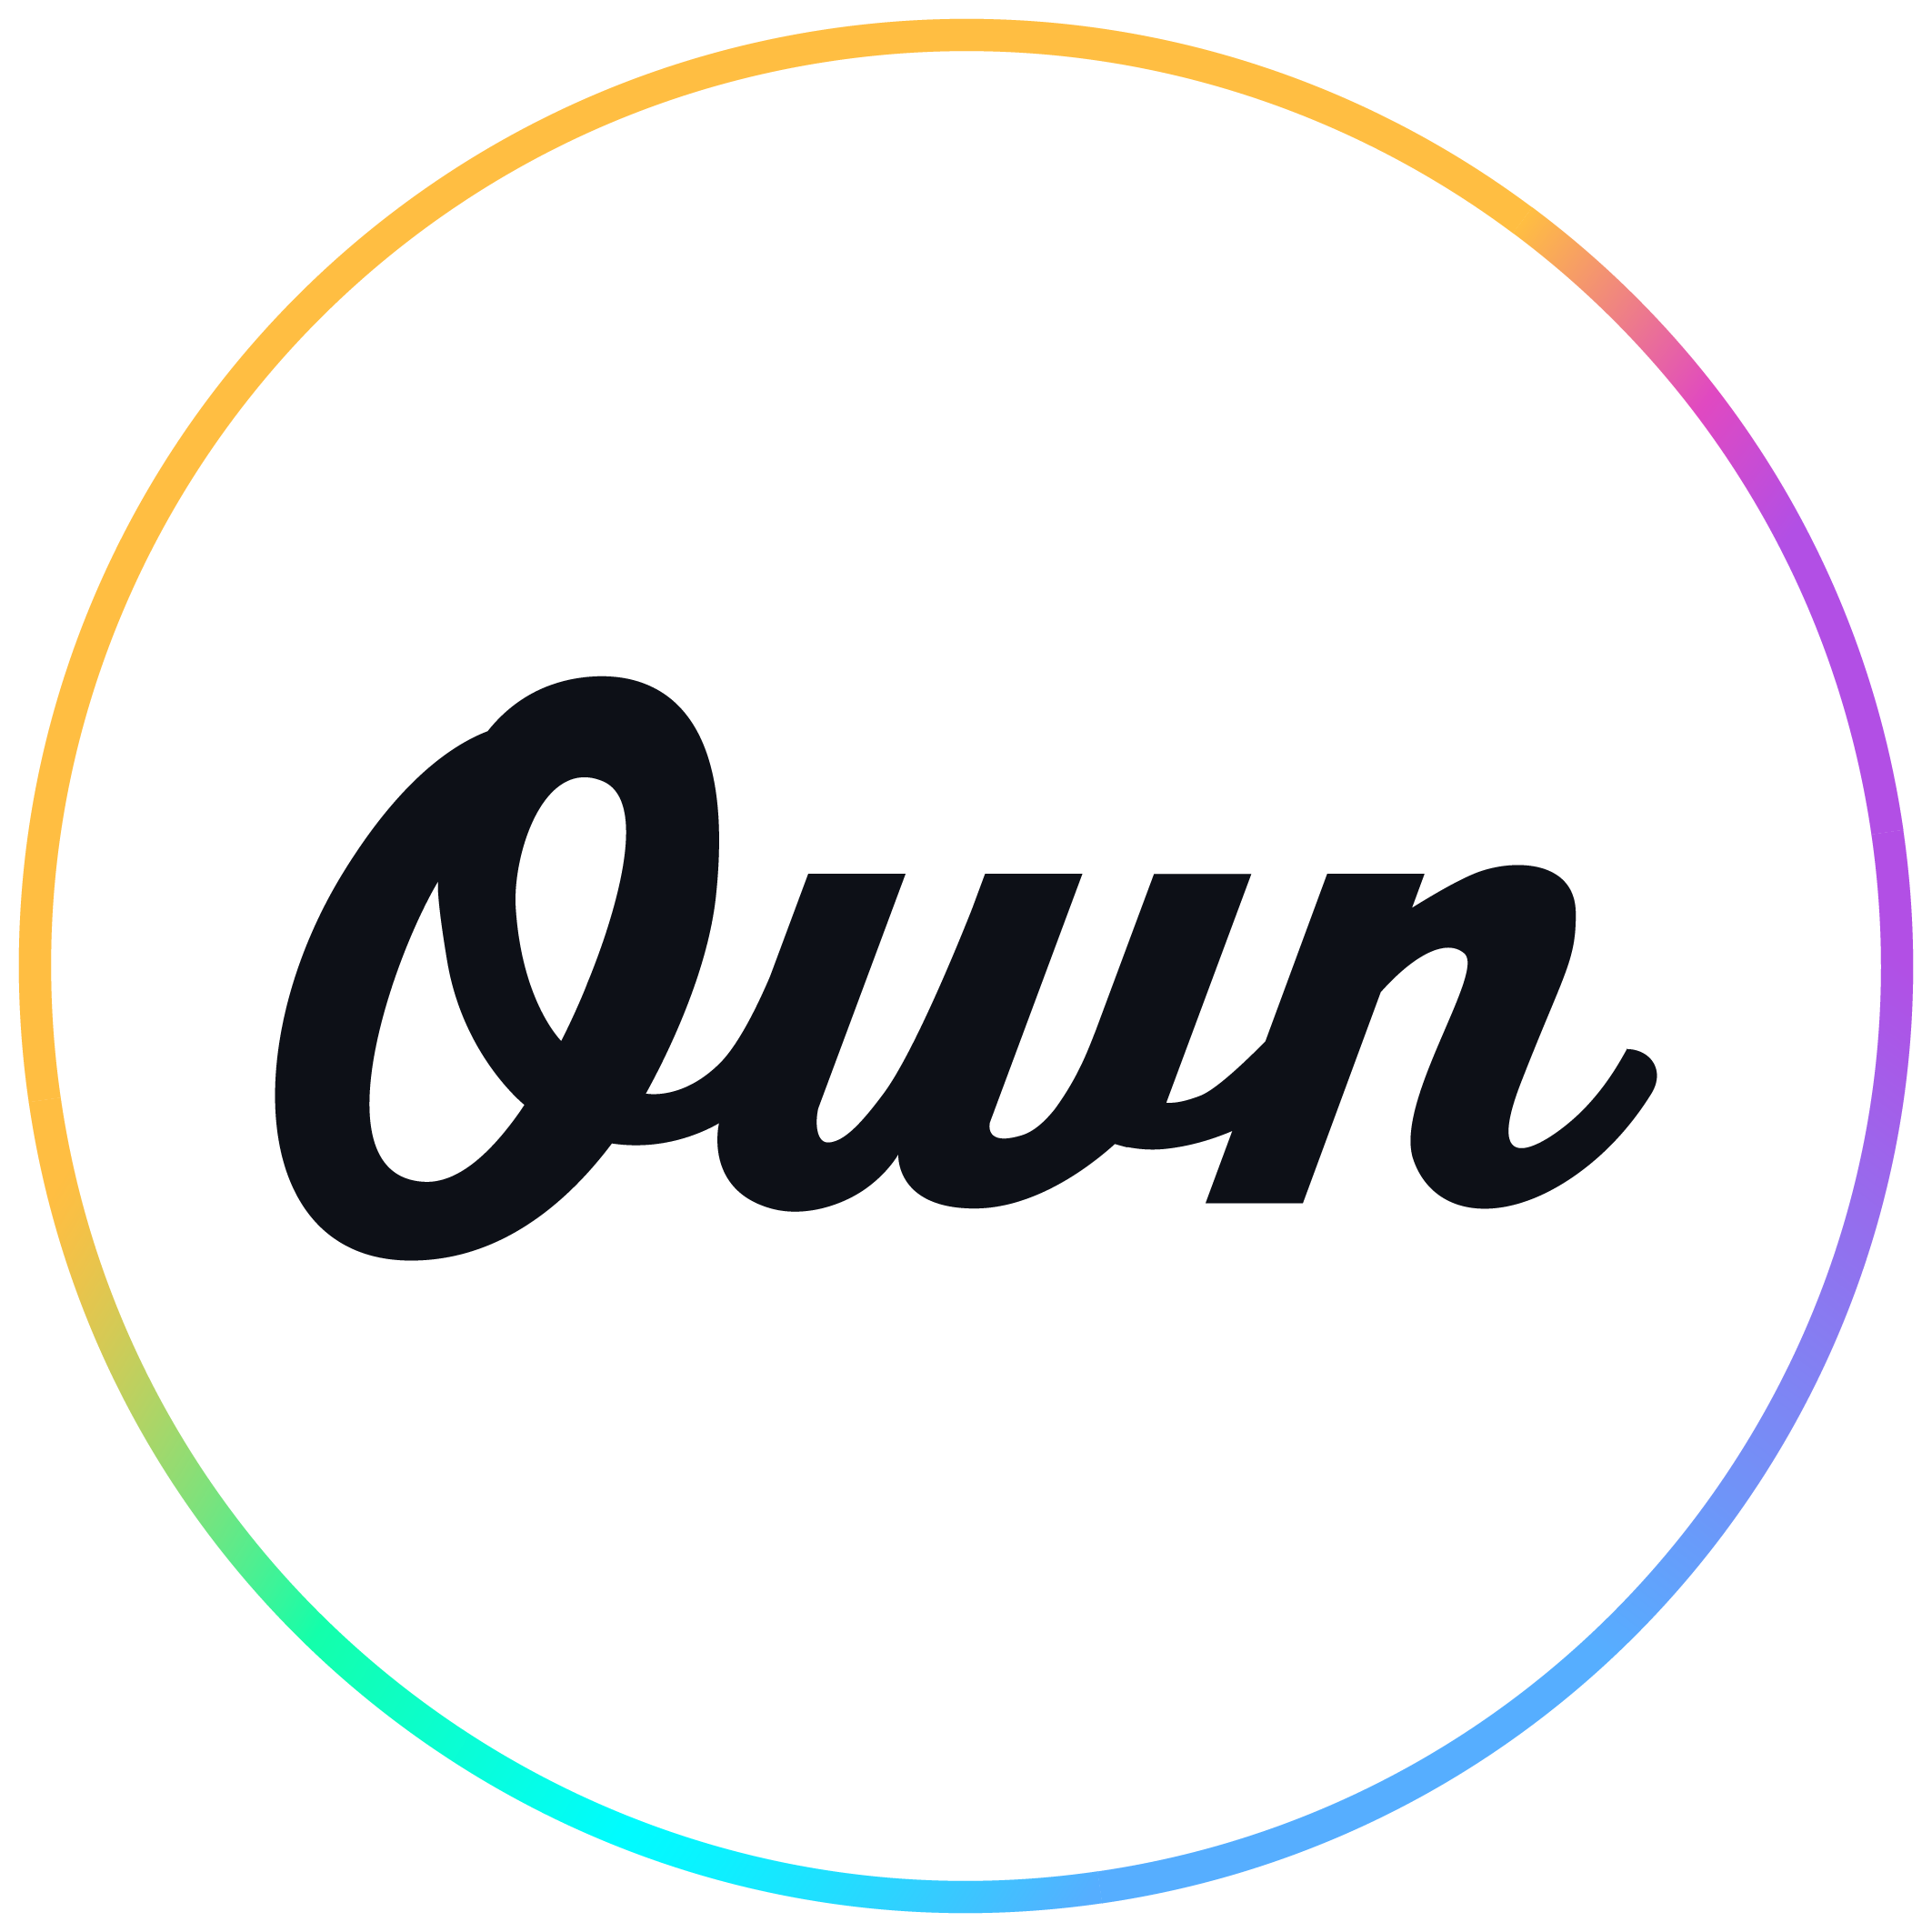 OwnBackup logo—mono